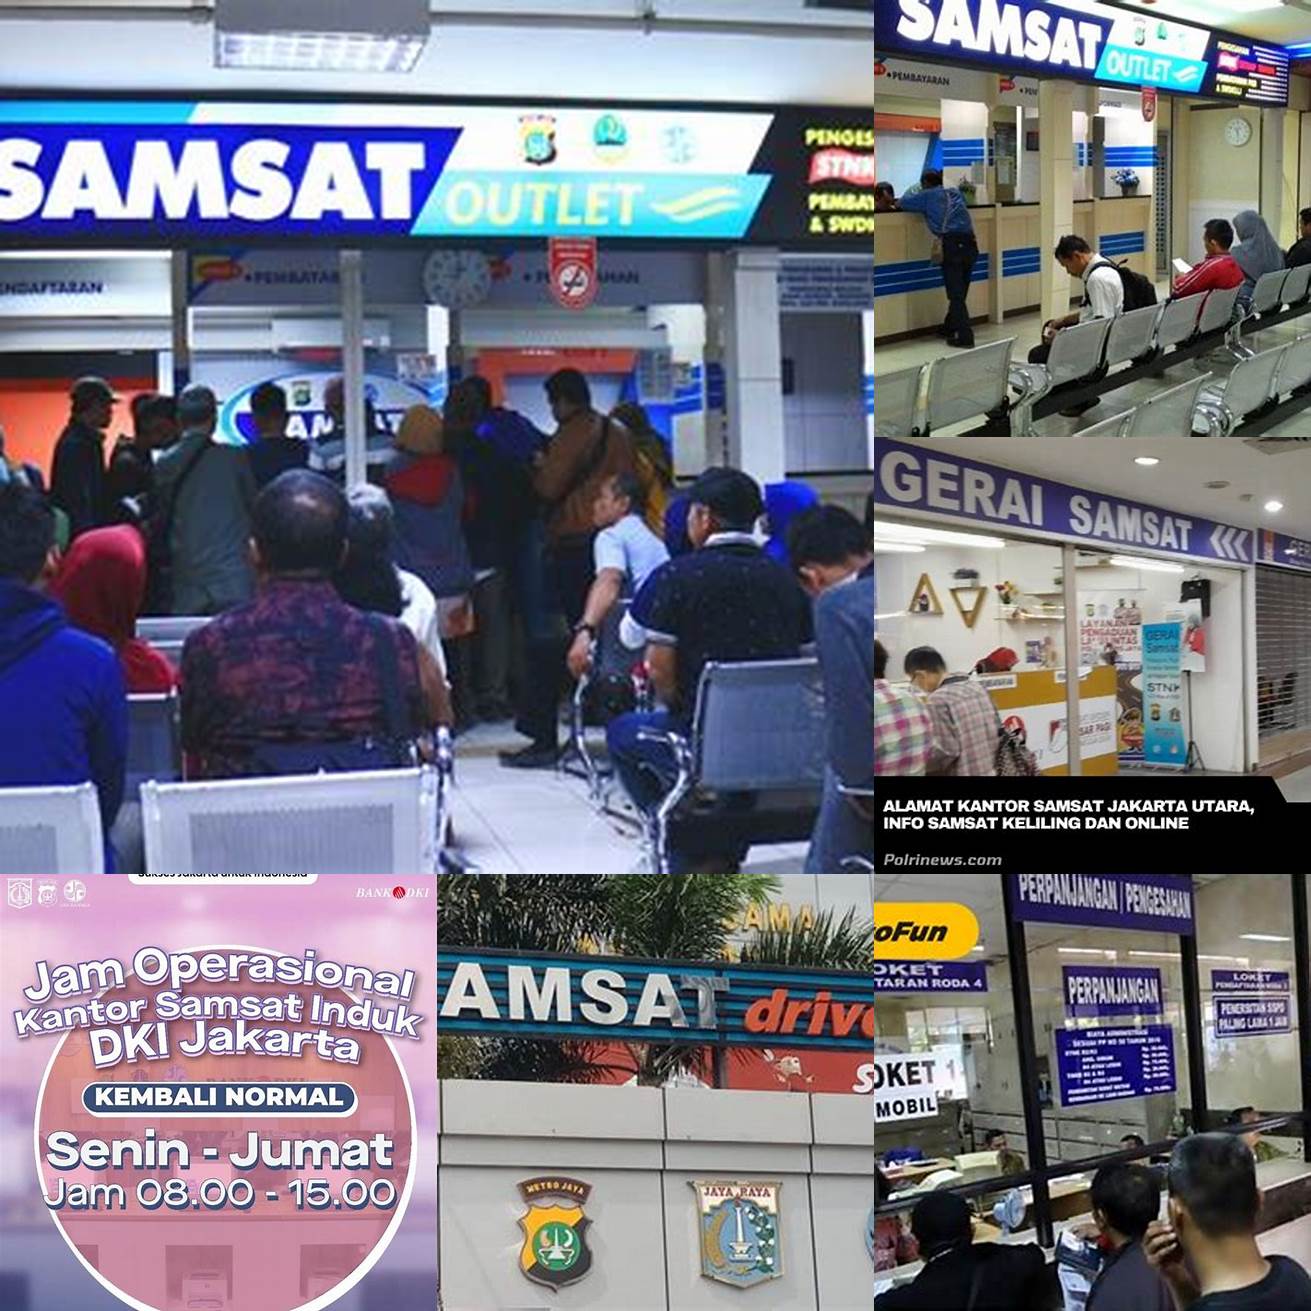 Buka situs resmi Samsat Jakarta di httpssamsatjakartagoid